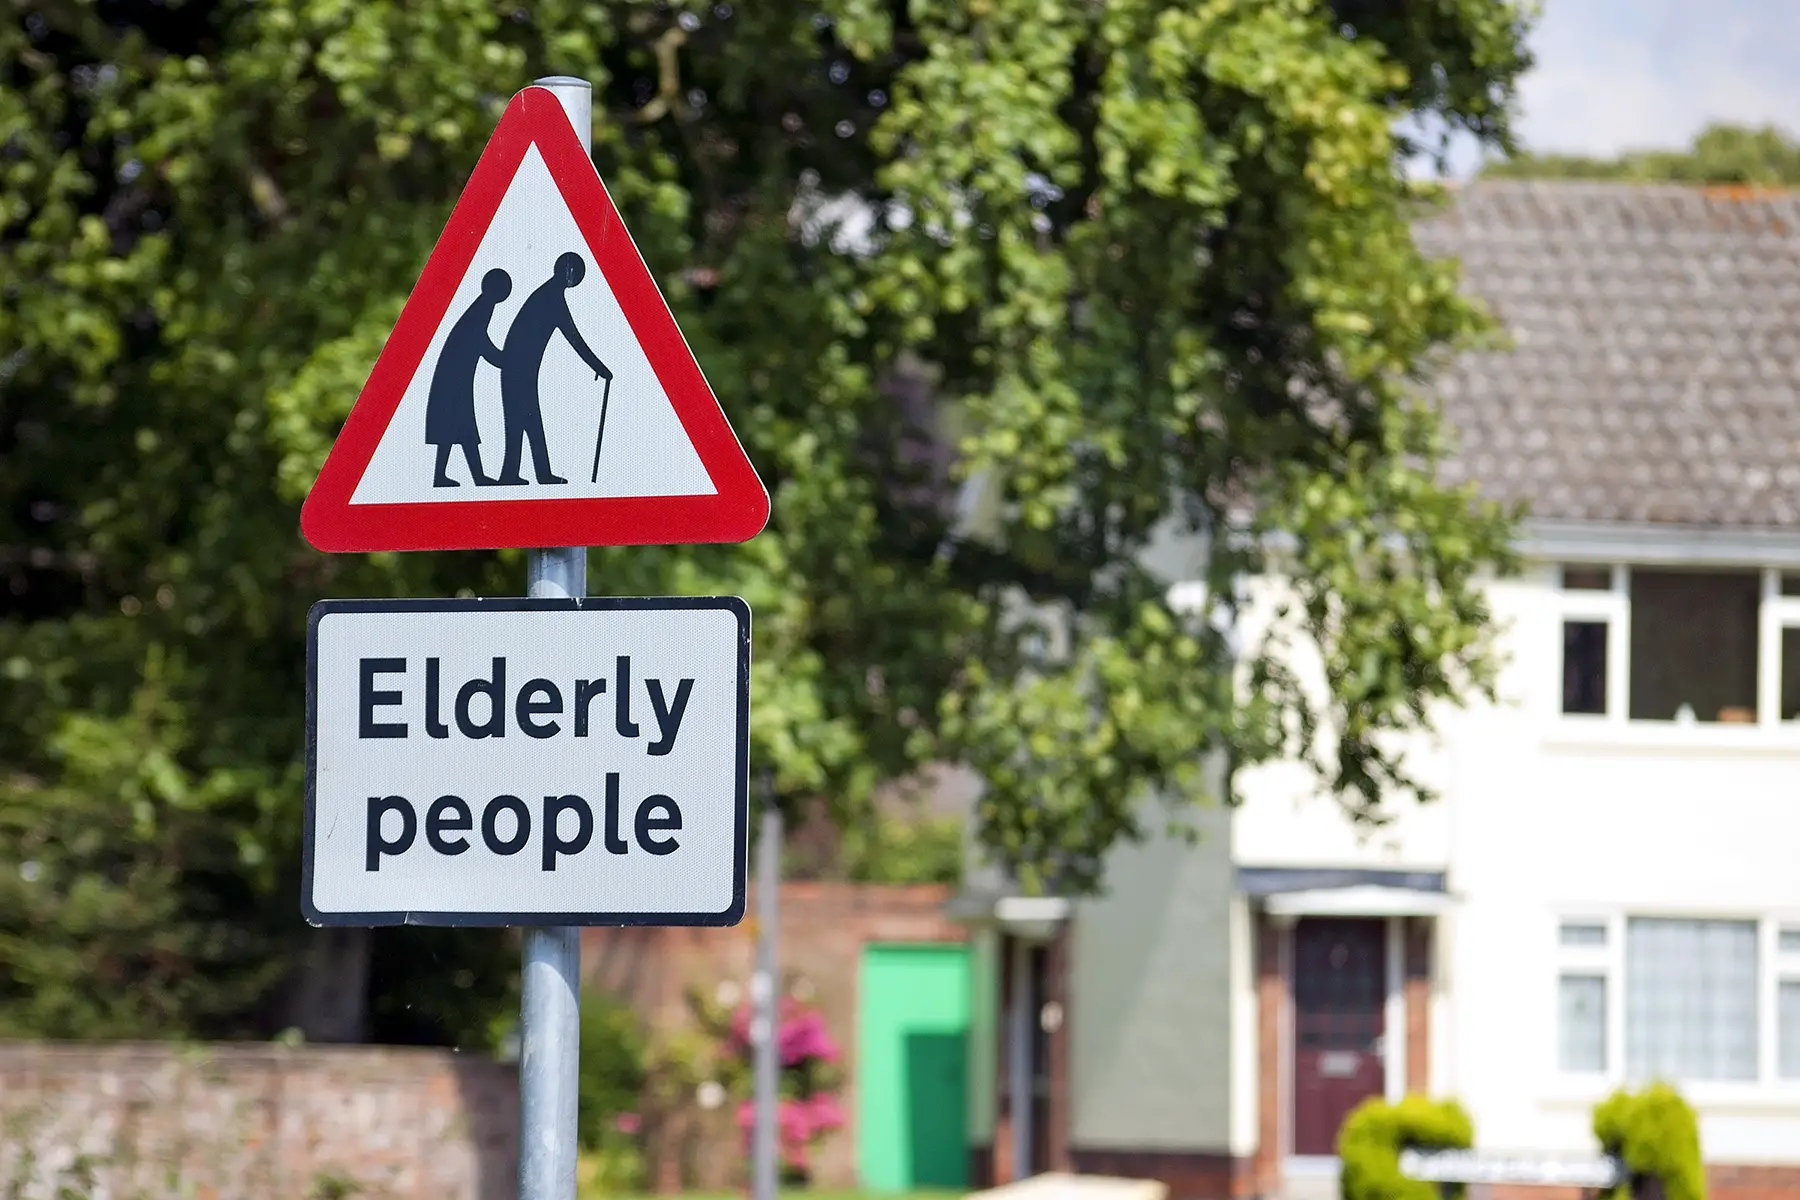 Elderly people road sign in England